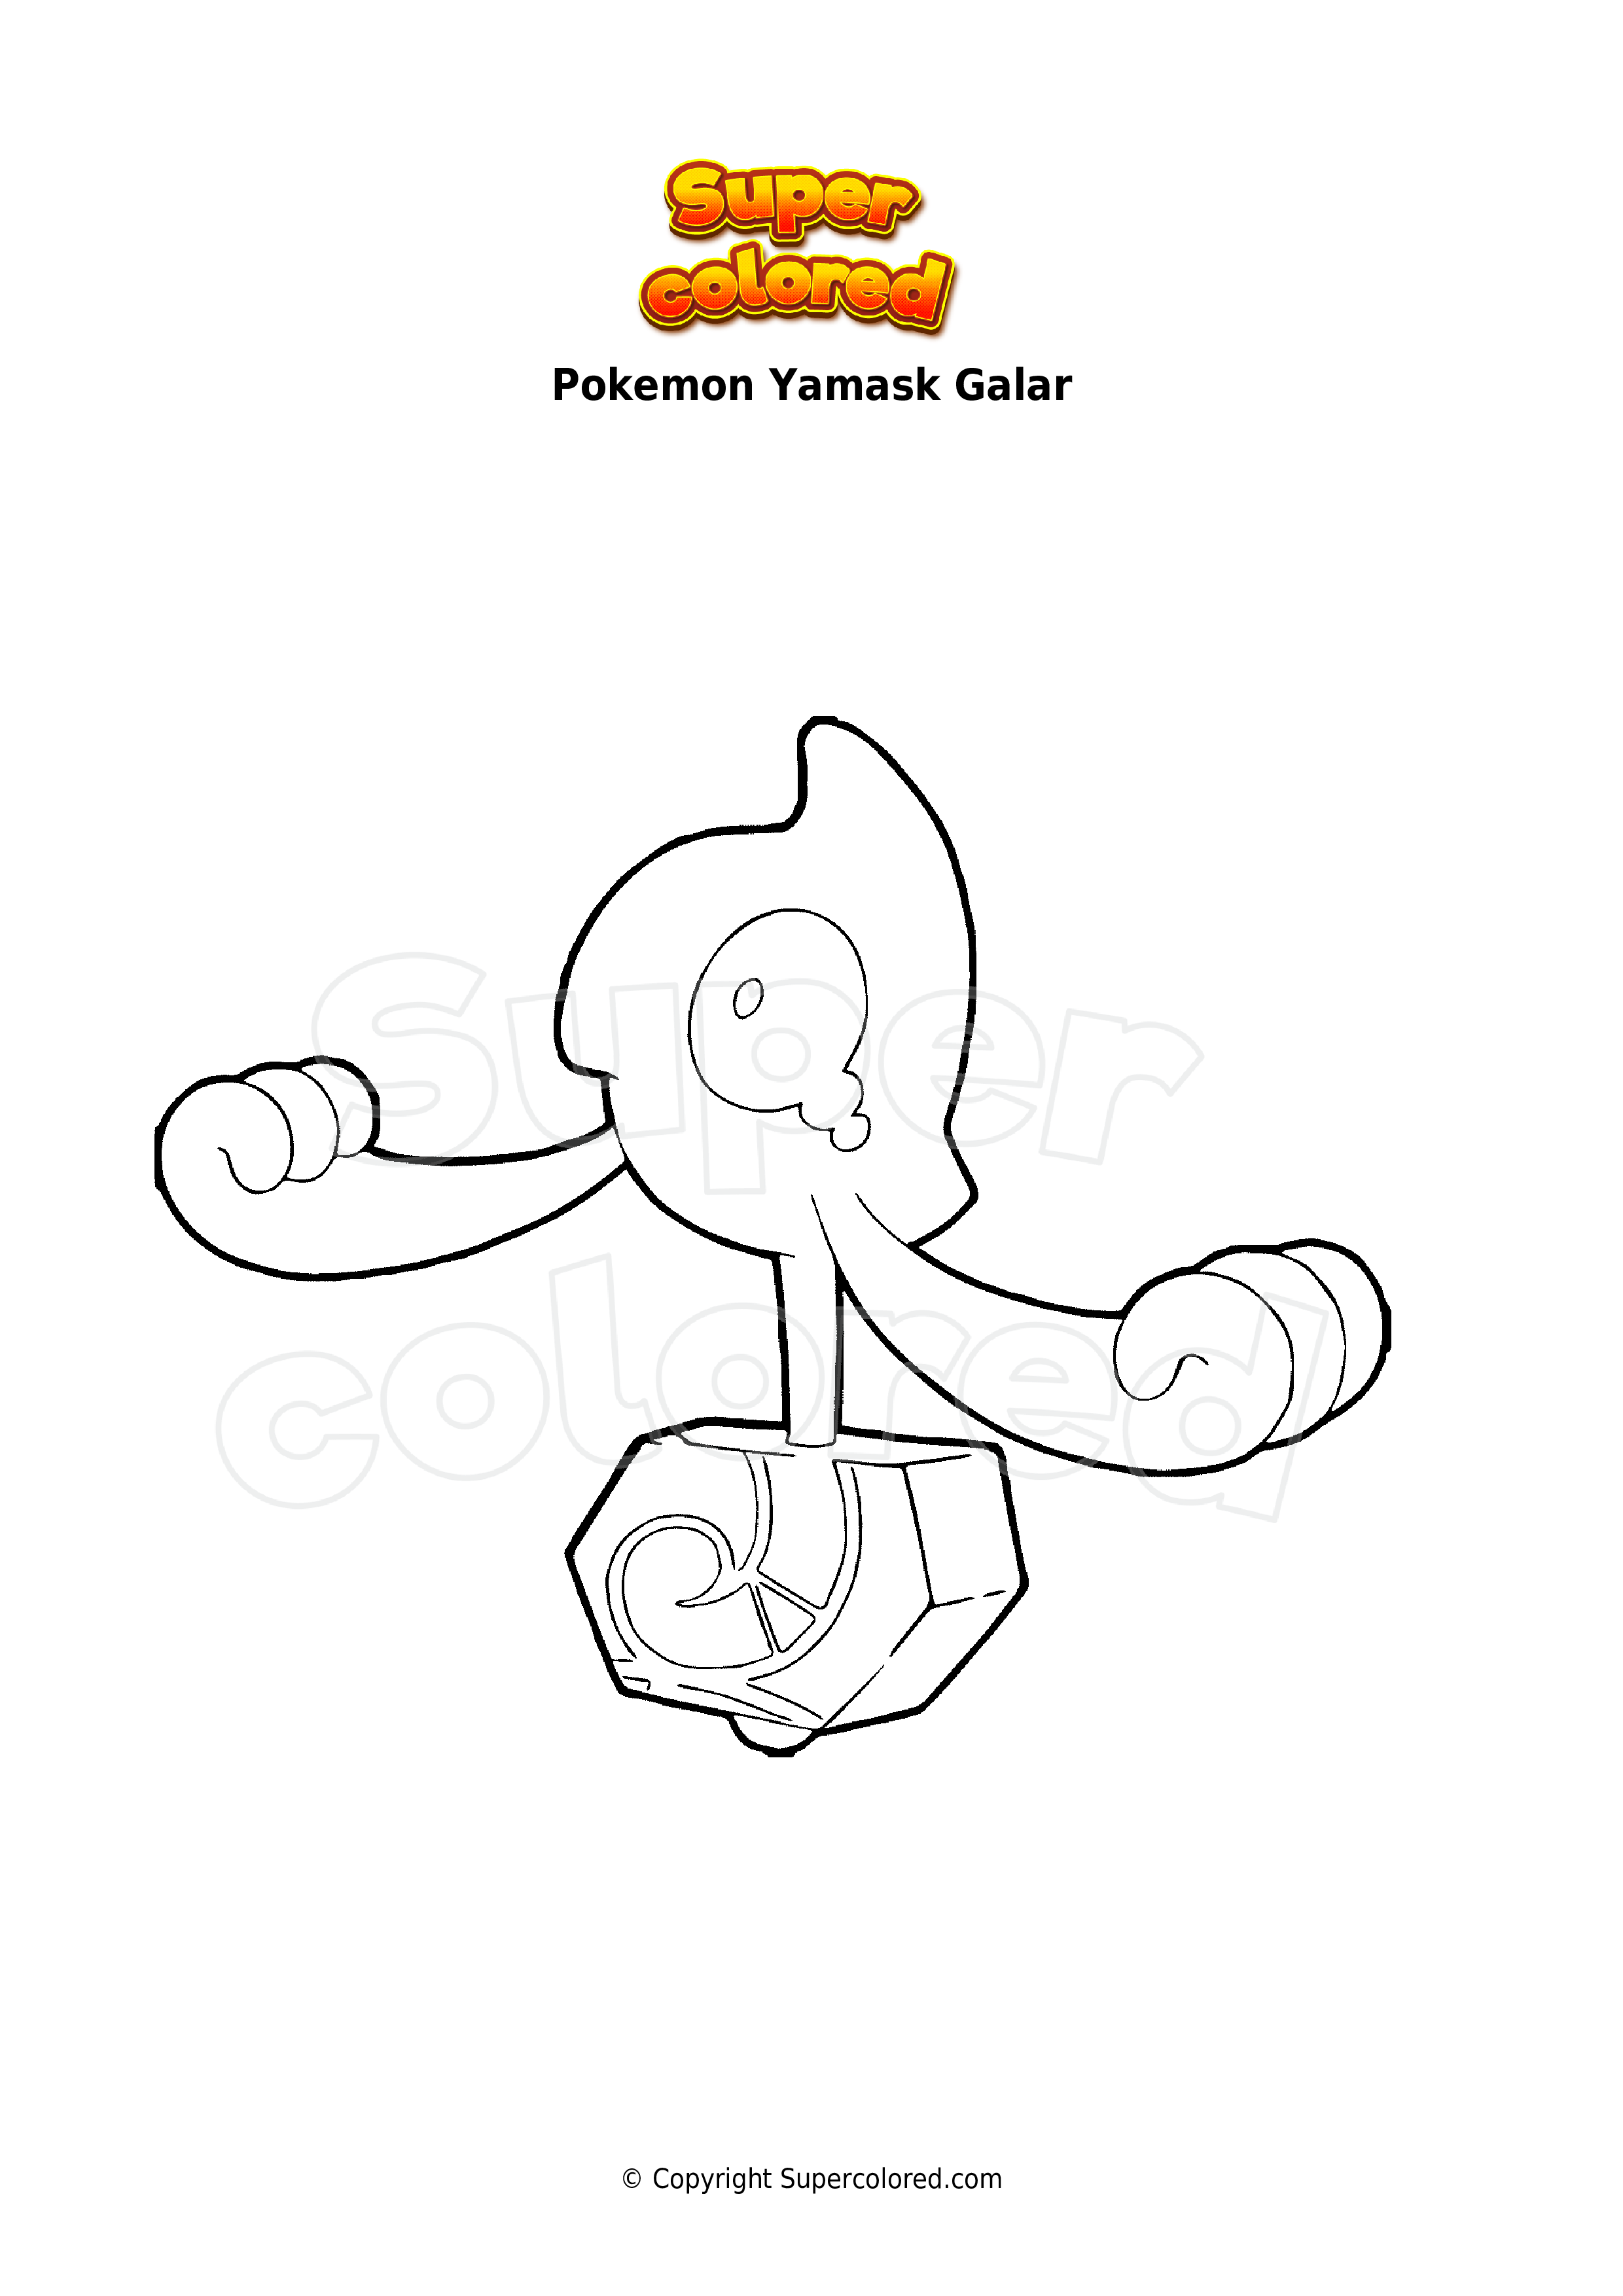 Coloring page Pokemon Yamask Galar - Supercolored.com